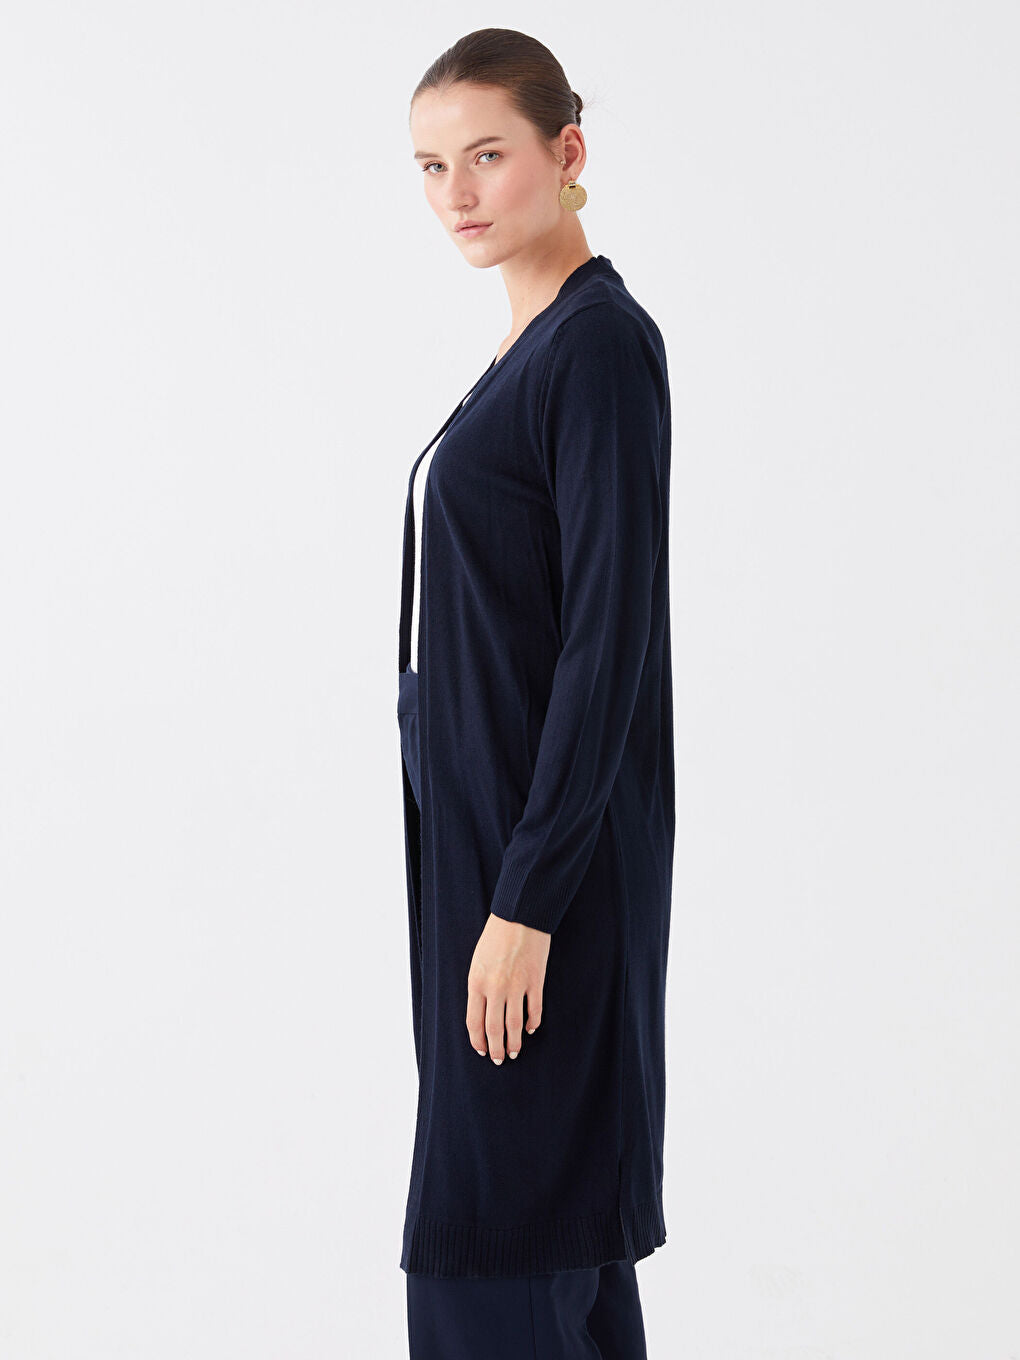 Shawl Collar Plain Long Sleeve Women Knitwear Cardigan